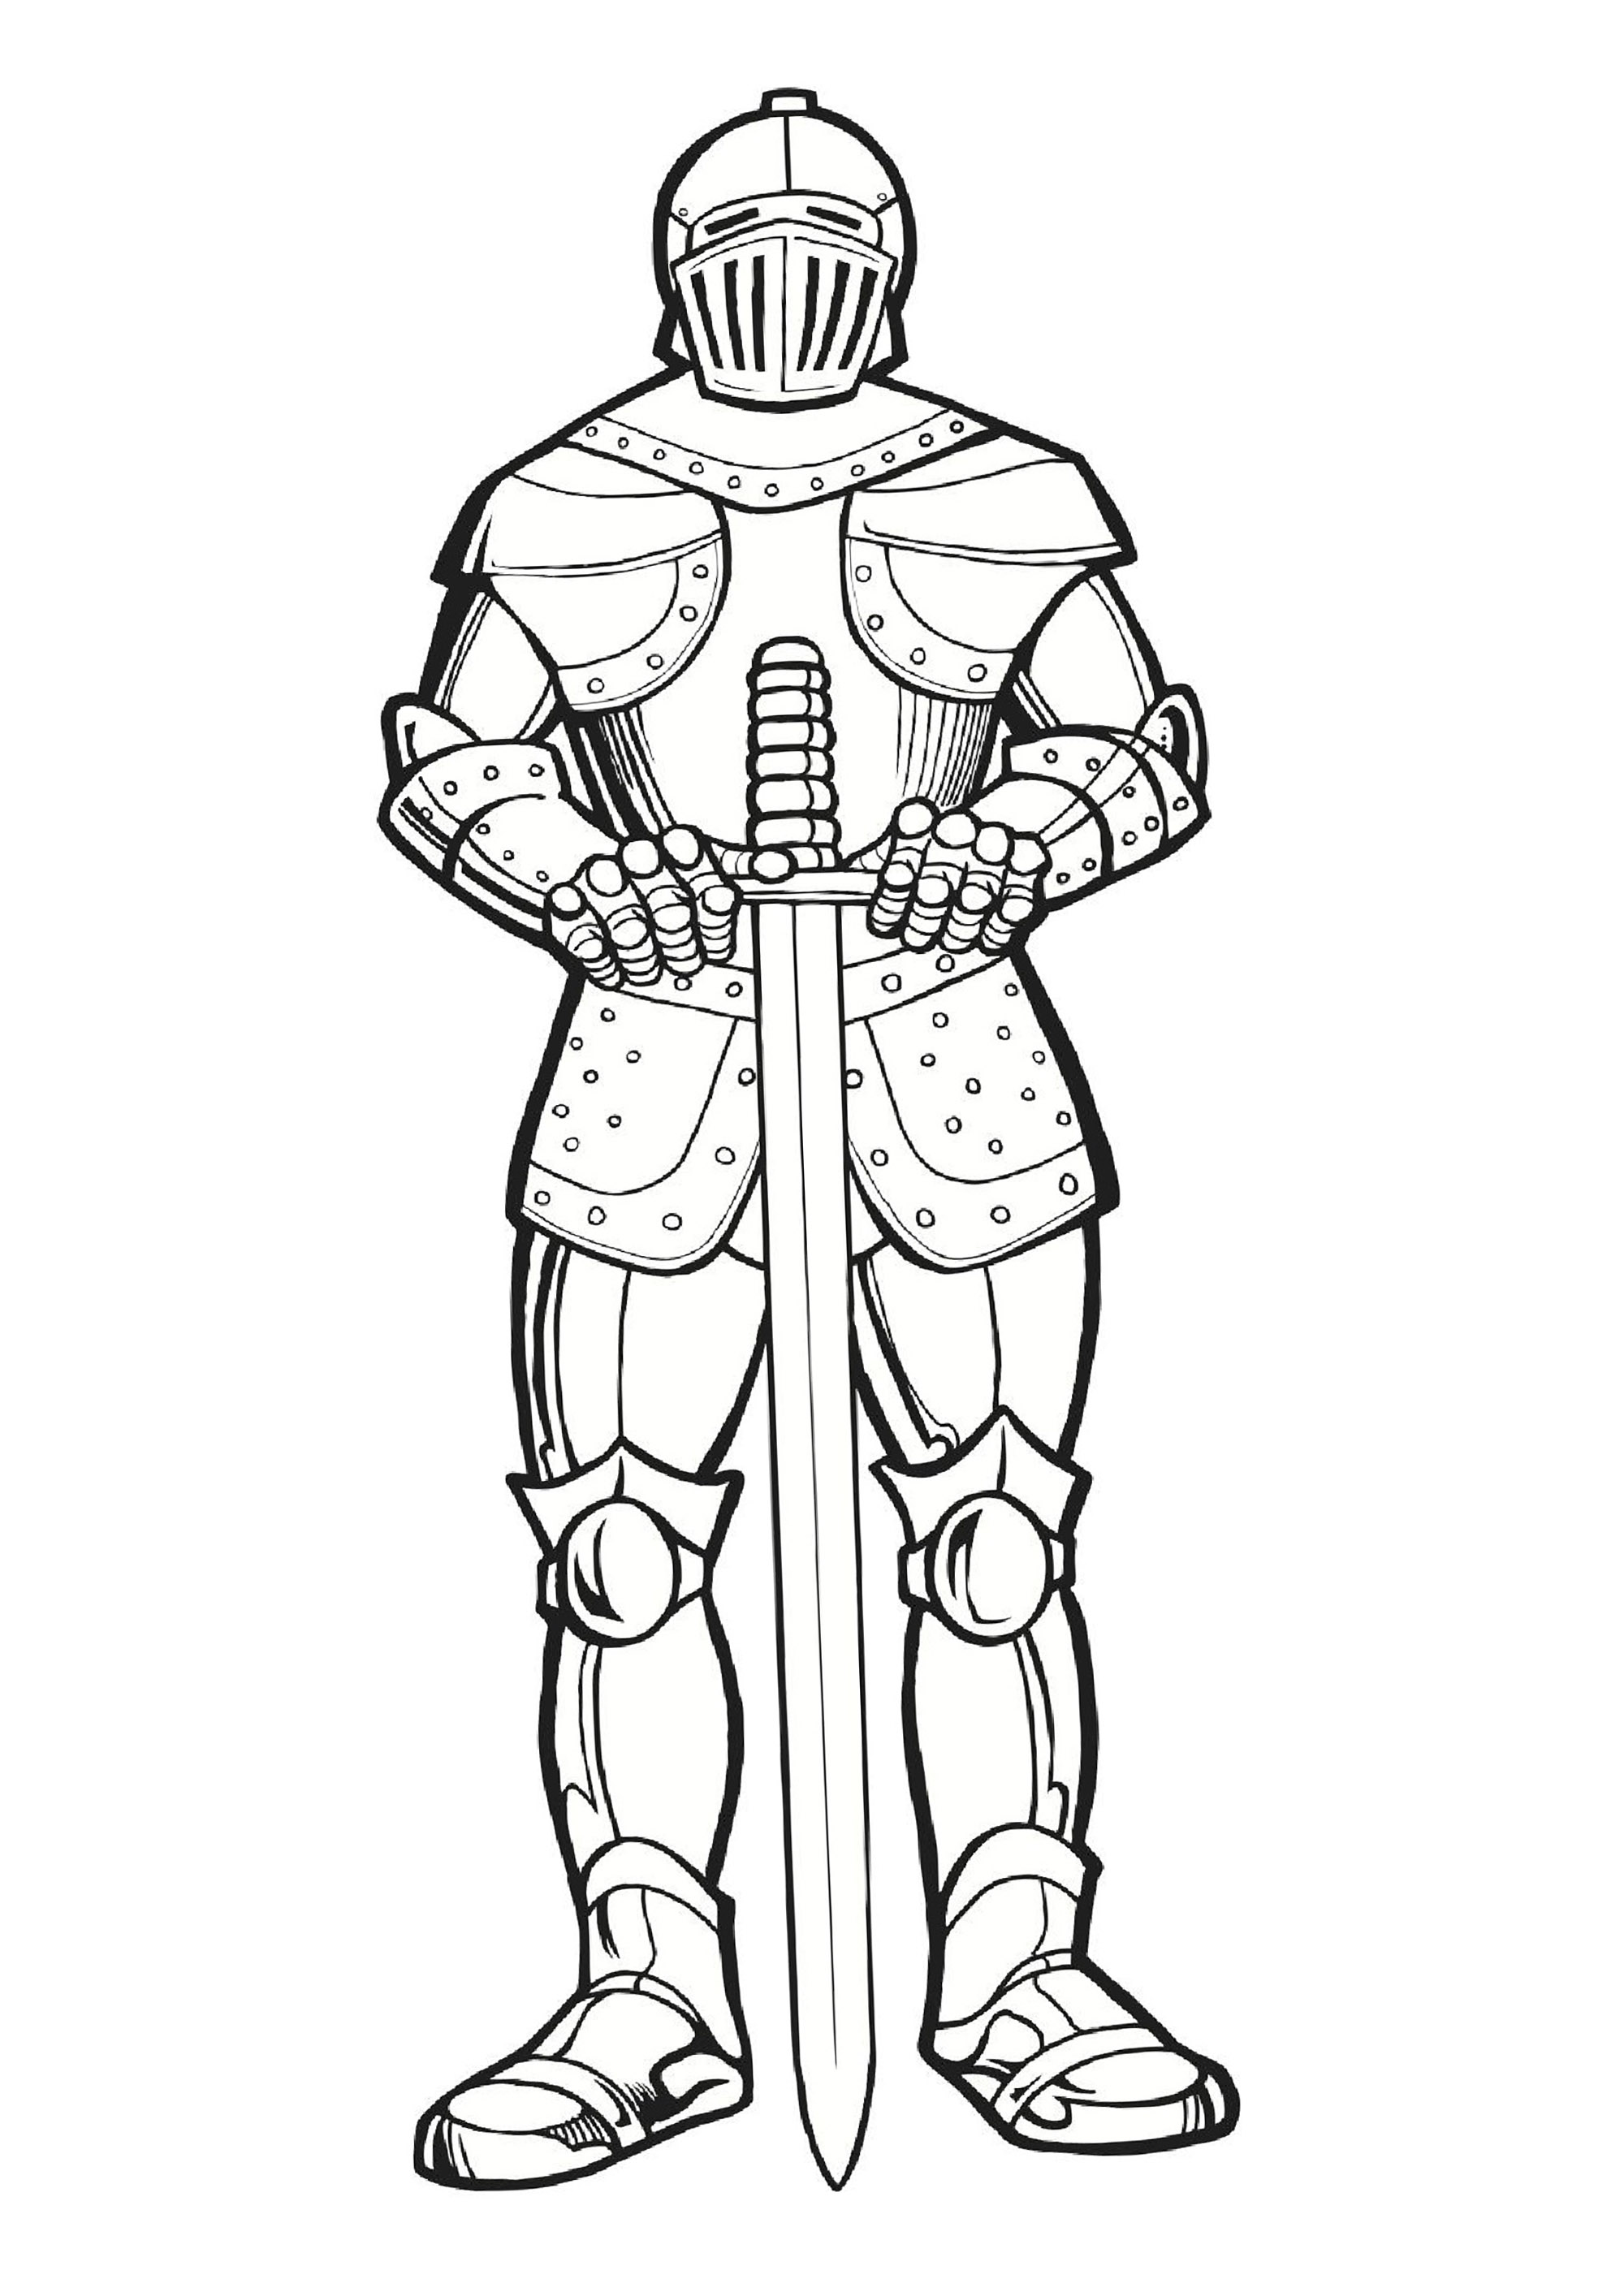 Knight's armor